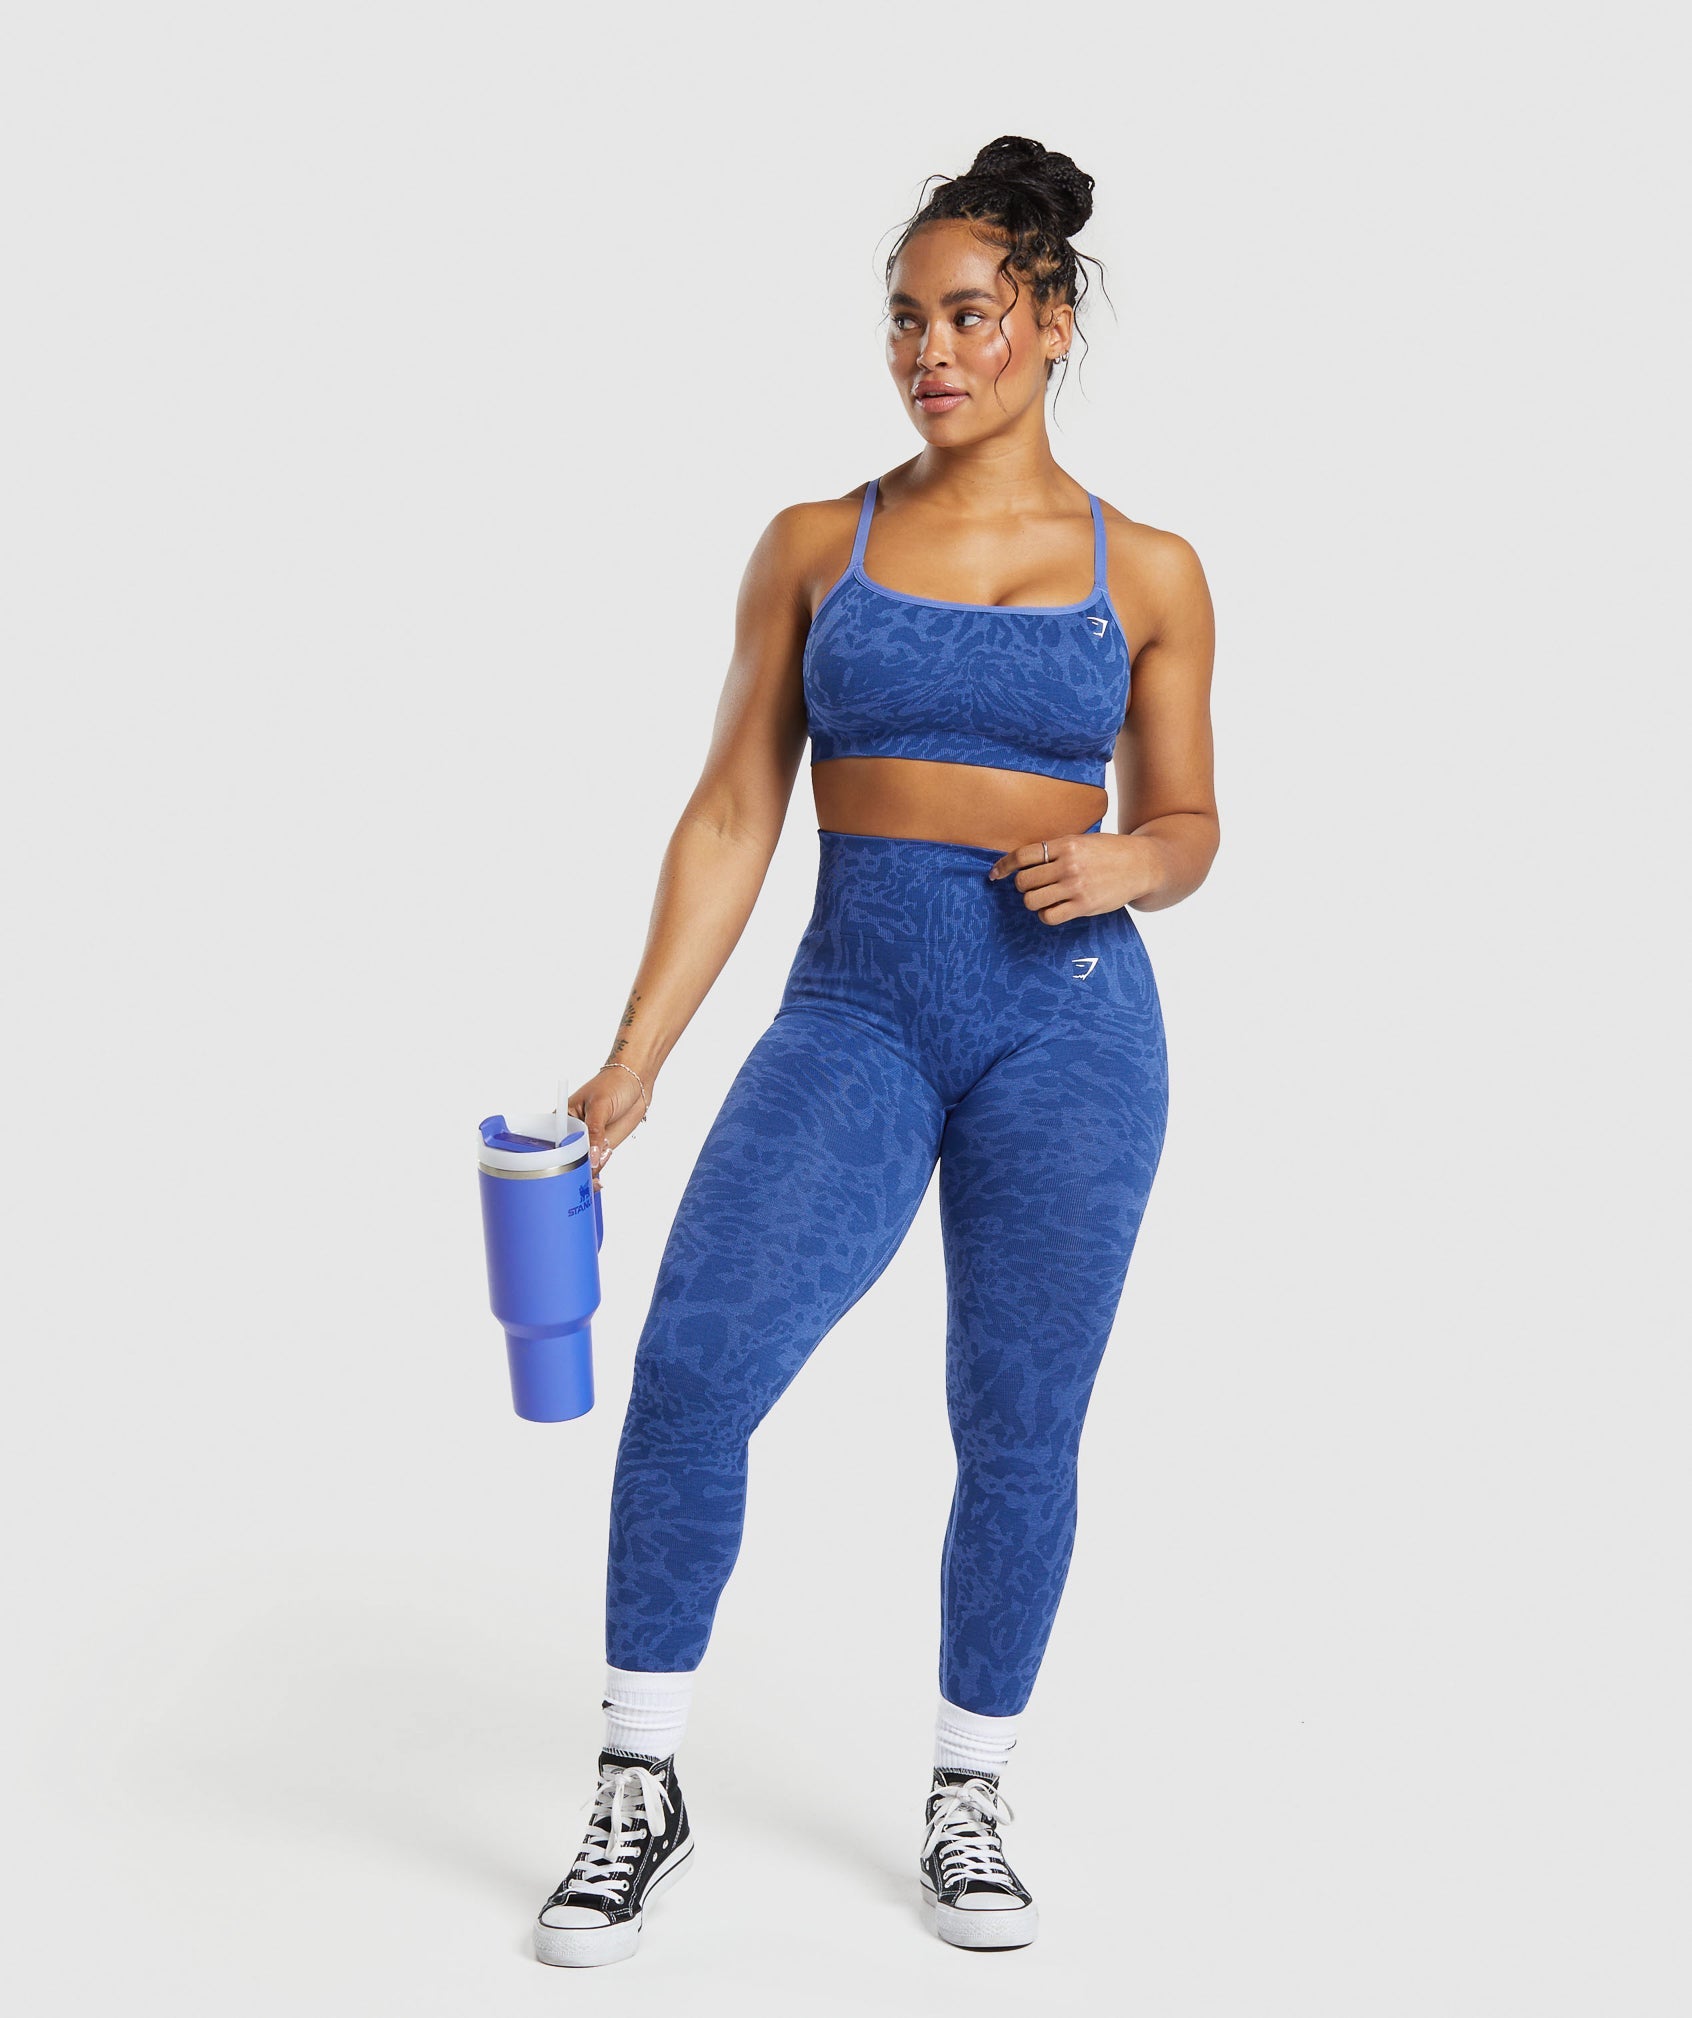 Gymshark Adapt Safari Tight Shorts - Wave Blue/Iris Blue